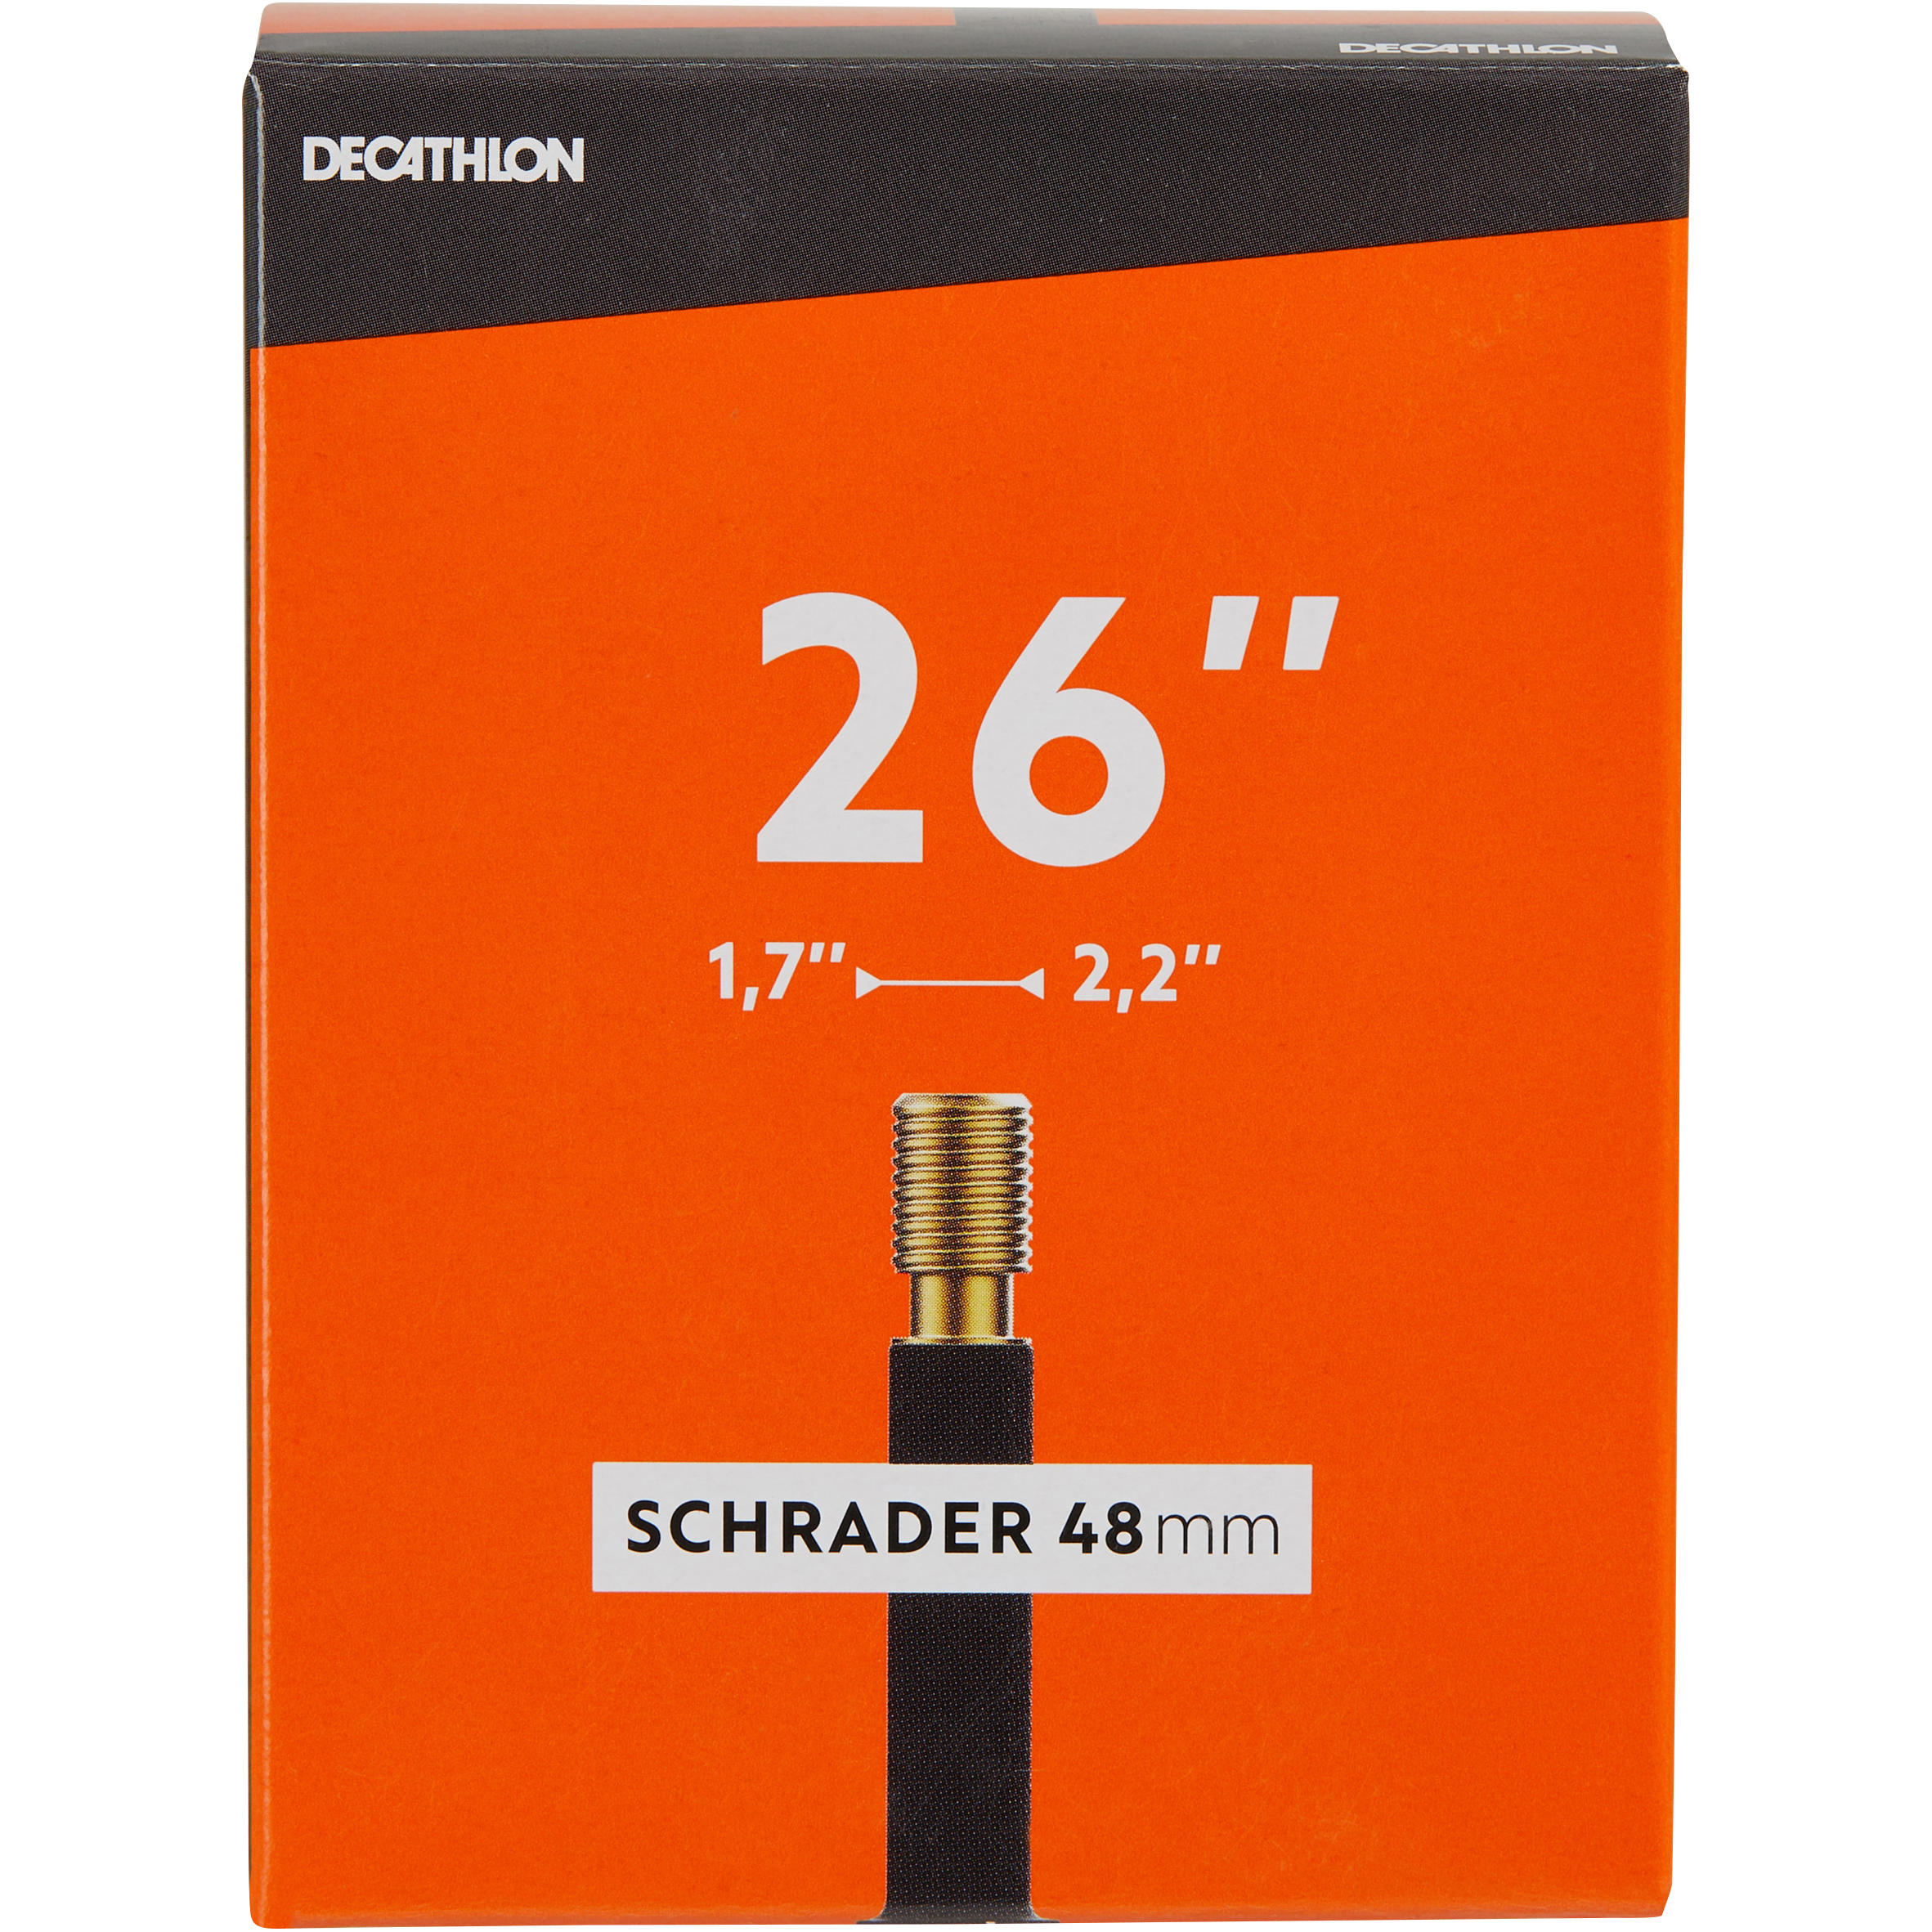 innerslang-26x1-7-2-2-schrader-48-mm